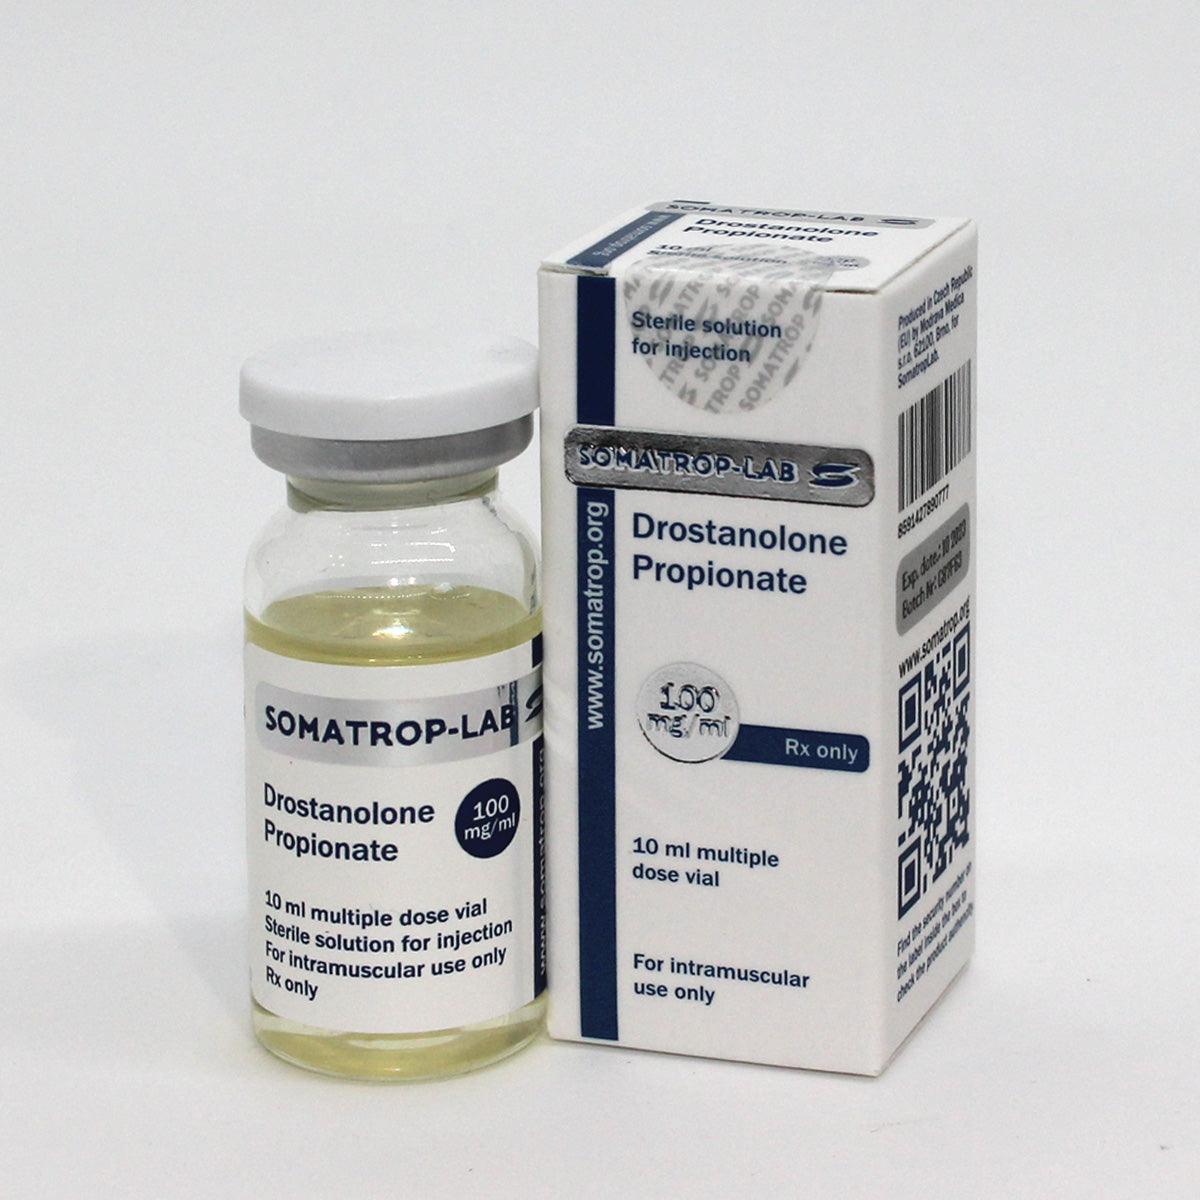 Somatrop-Lab Drostanolone Propionate 10ml/100mg/ml front packaging.